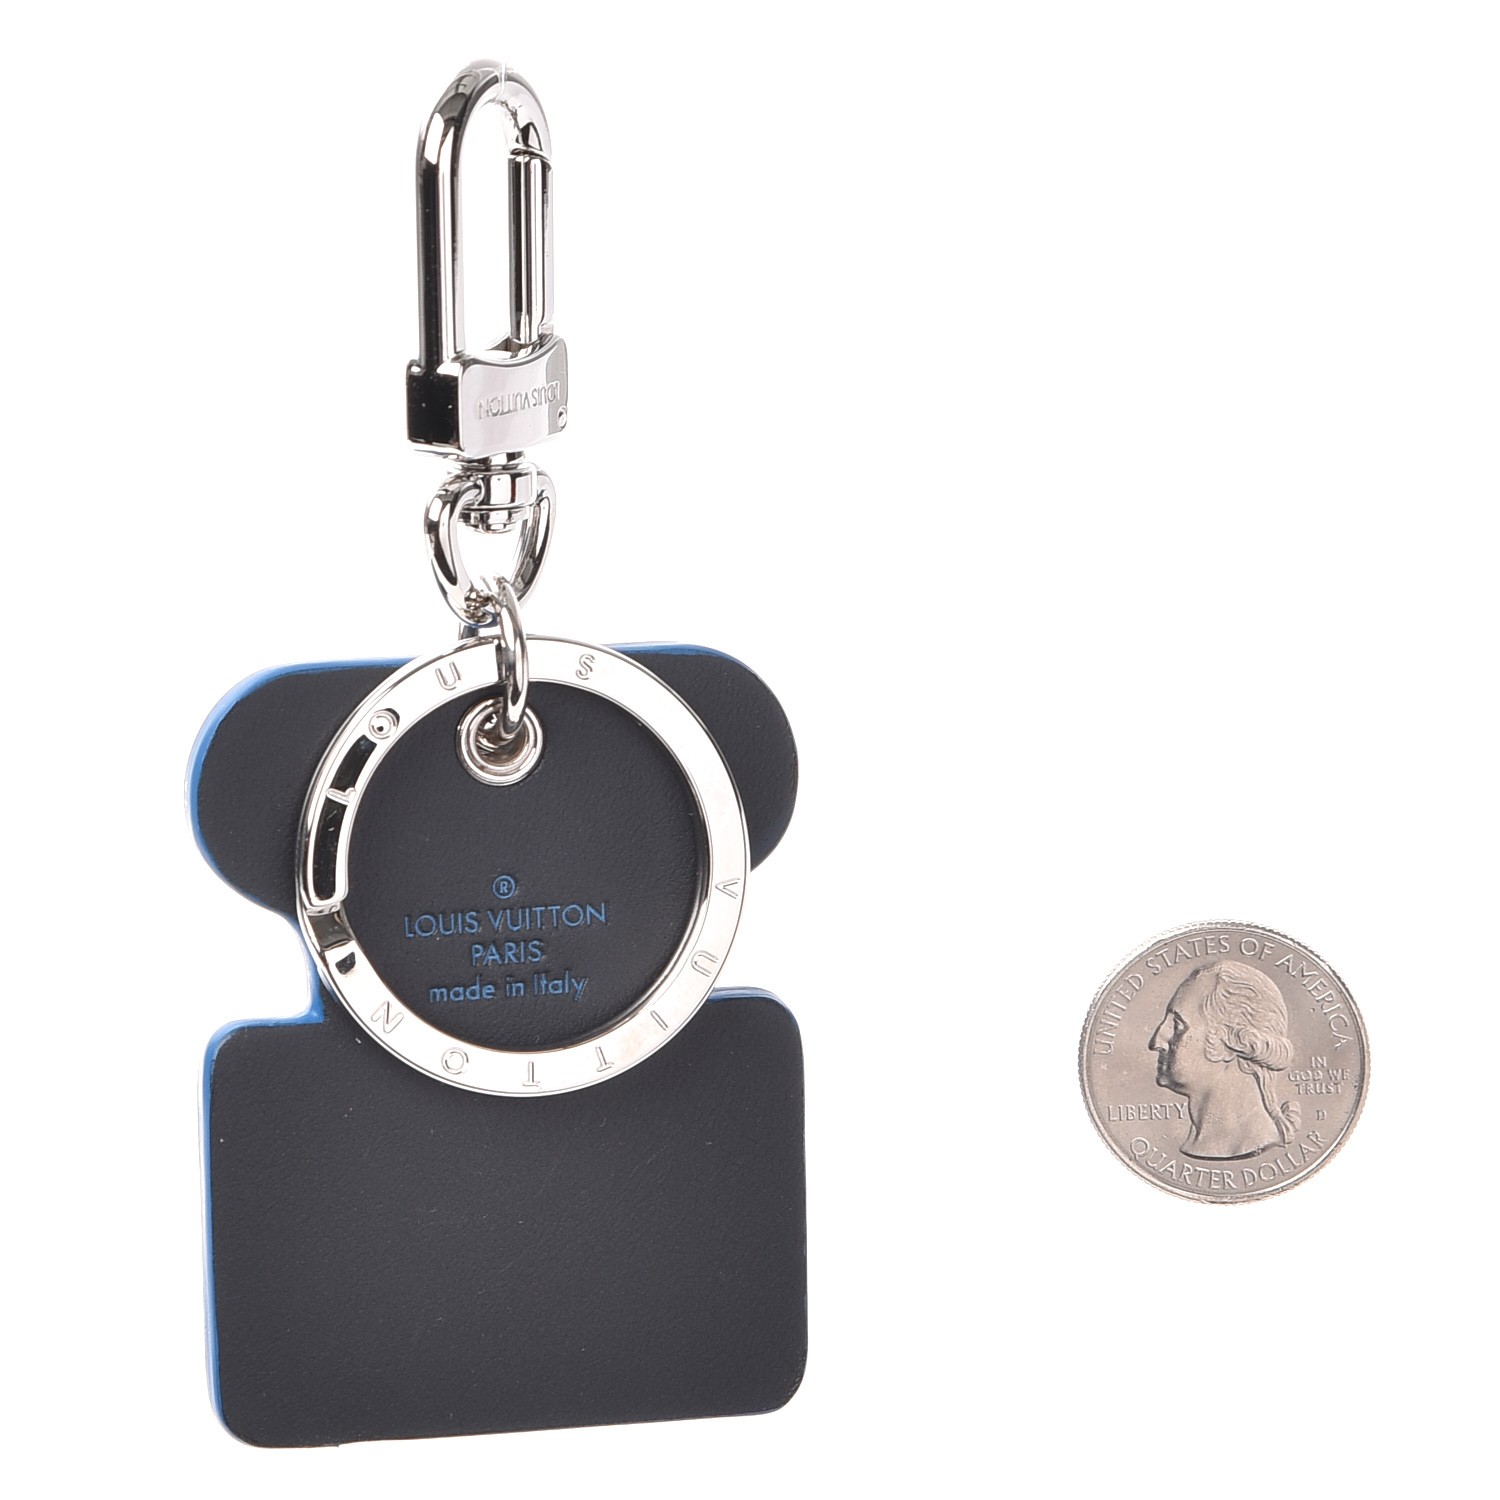 LOUIS VUITTON S Lock Bag Charm Key Holder Silver 245509